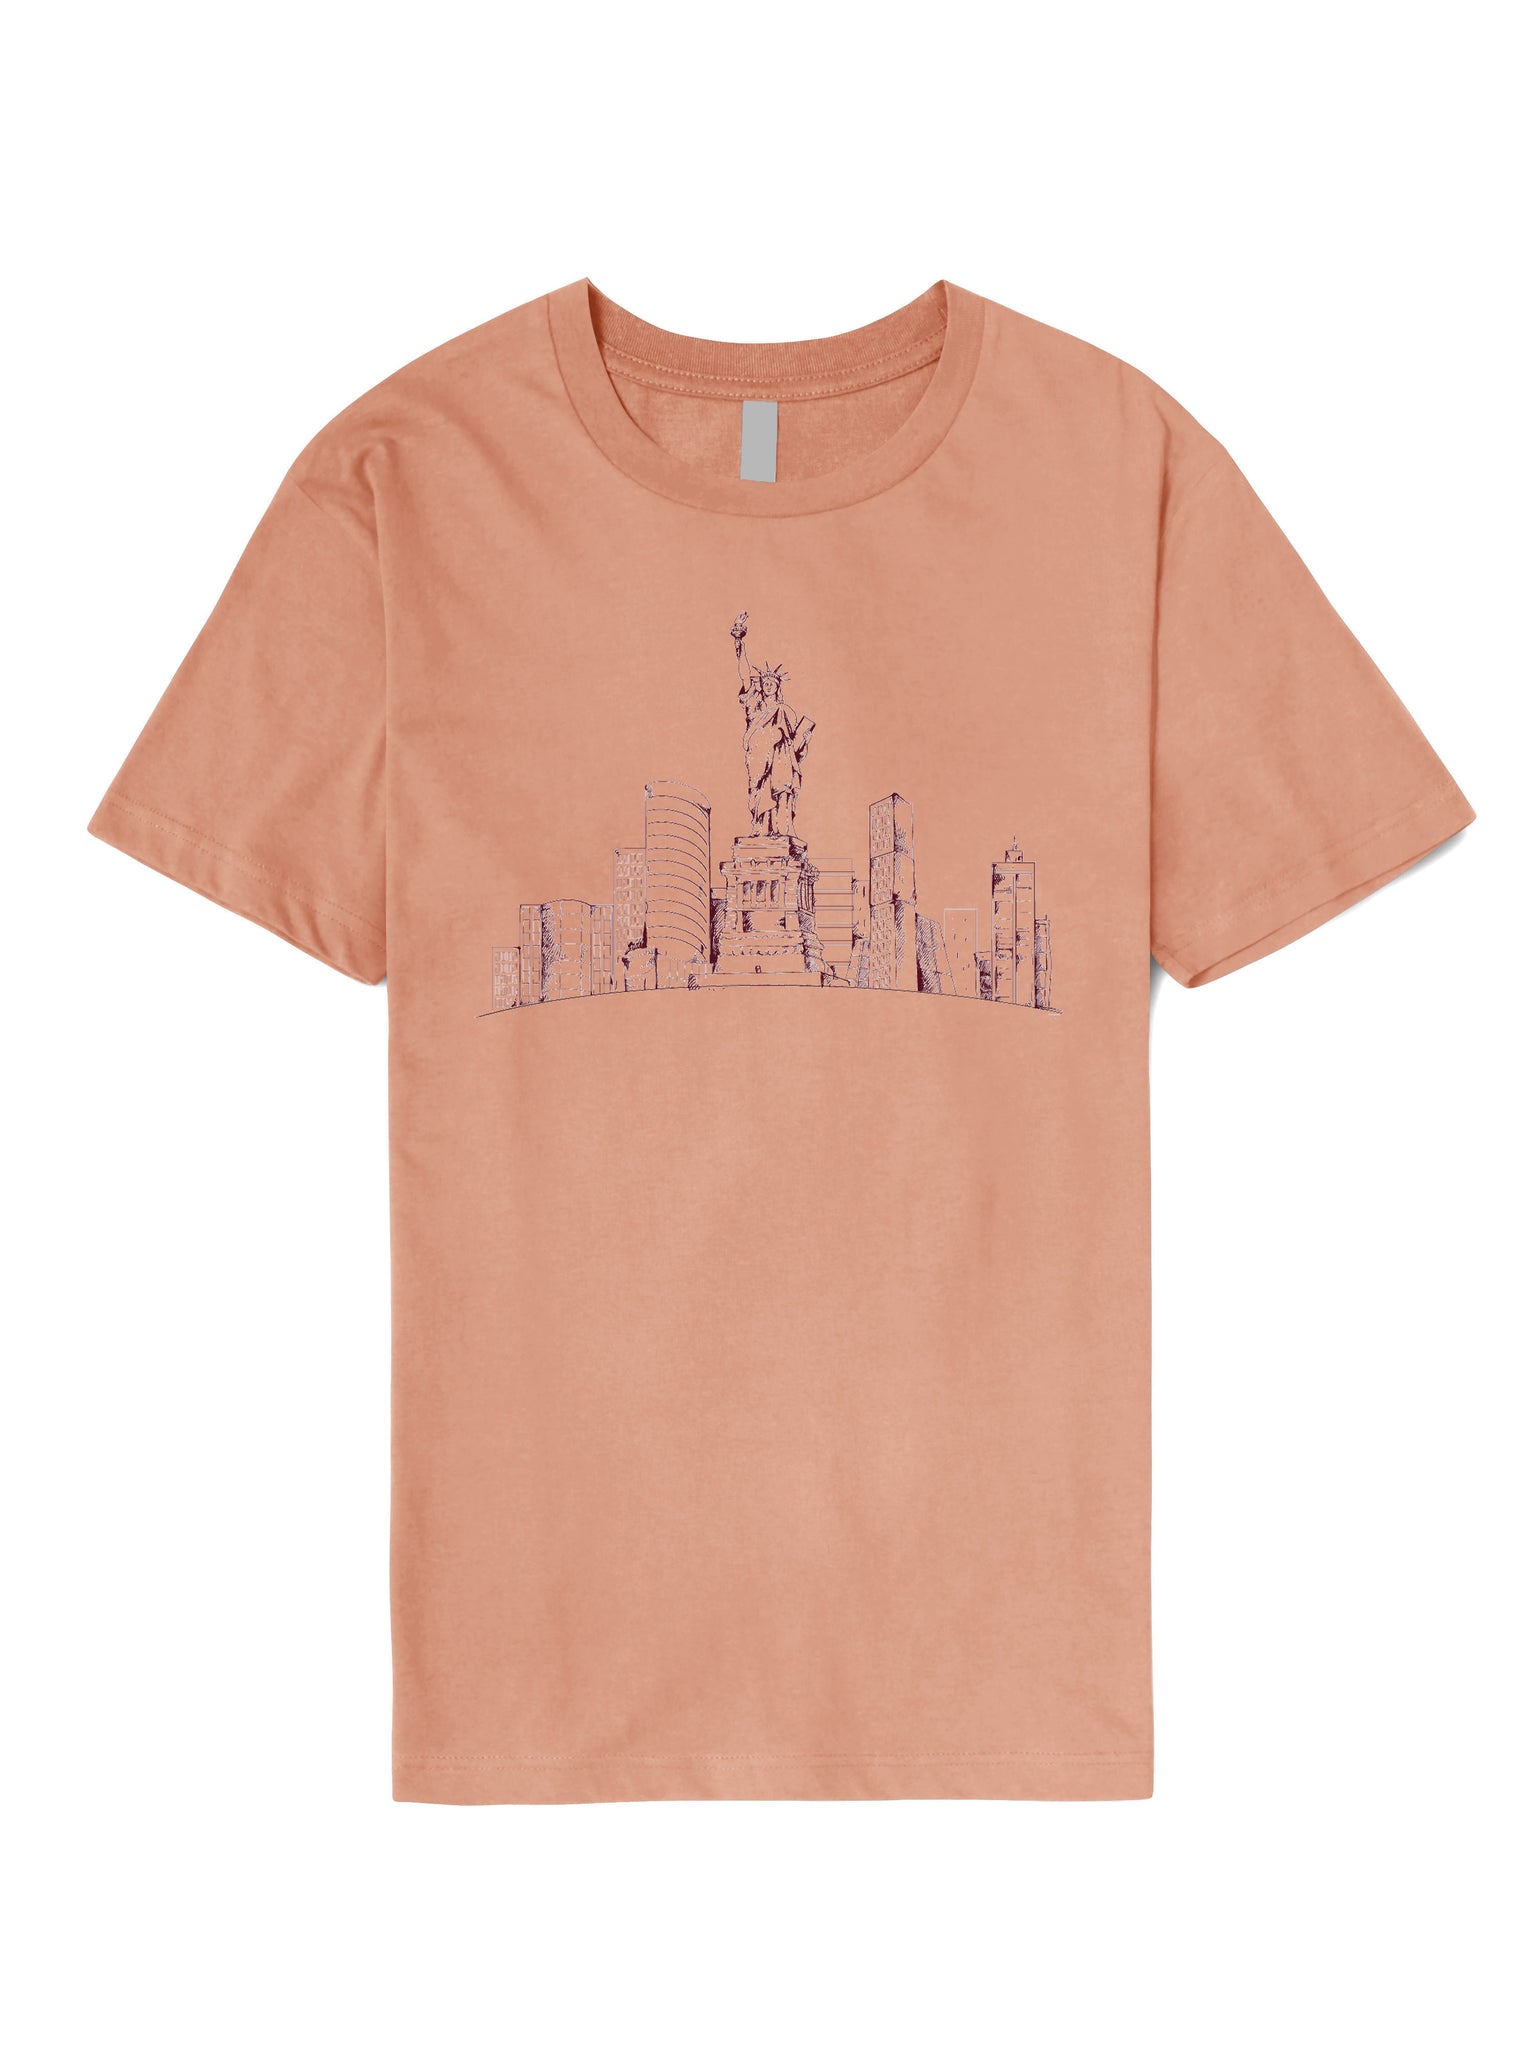 New York City Skyline Graphic T Shirt - T-Shirt & Tank Tops | Hat and Beyond